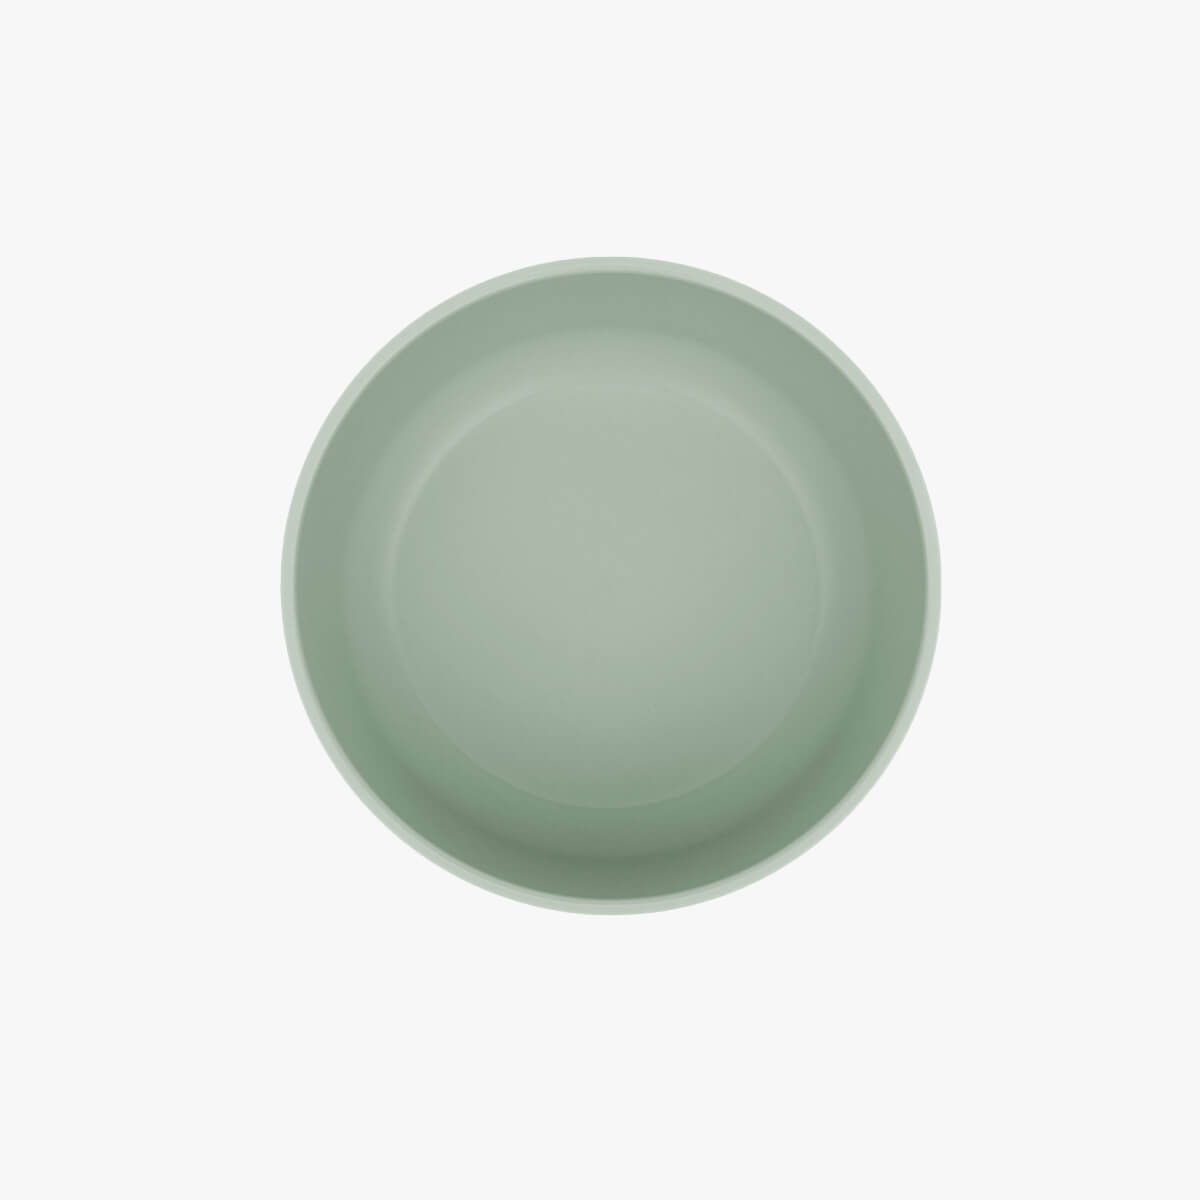 Mealtime Bowl in Sage / ezpz Basics Line / Stylish Bowls for Big Kids